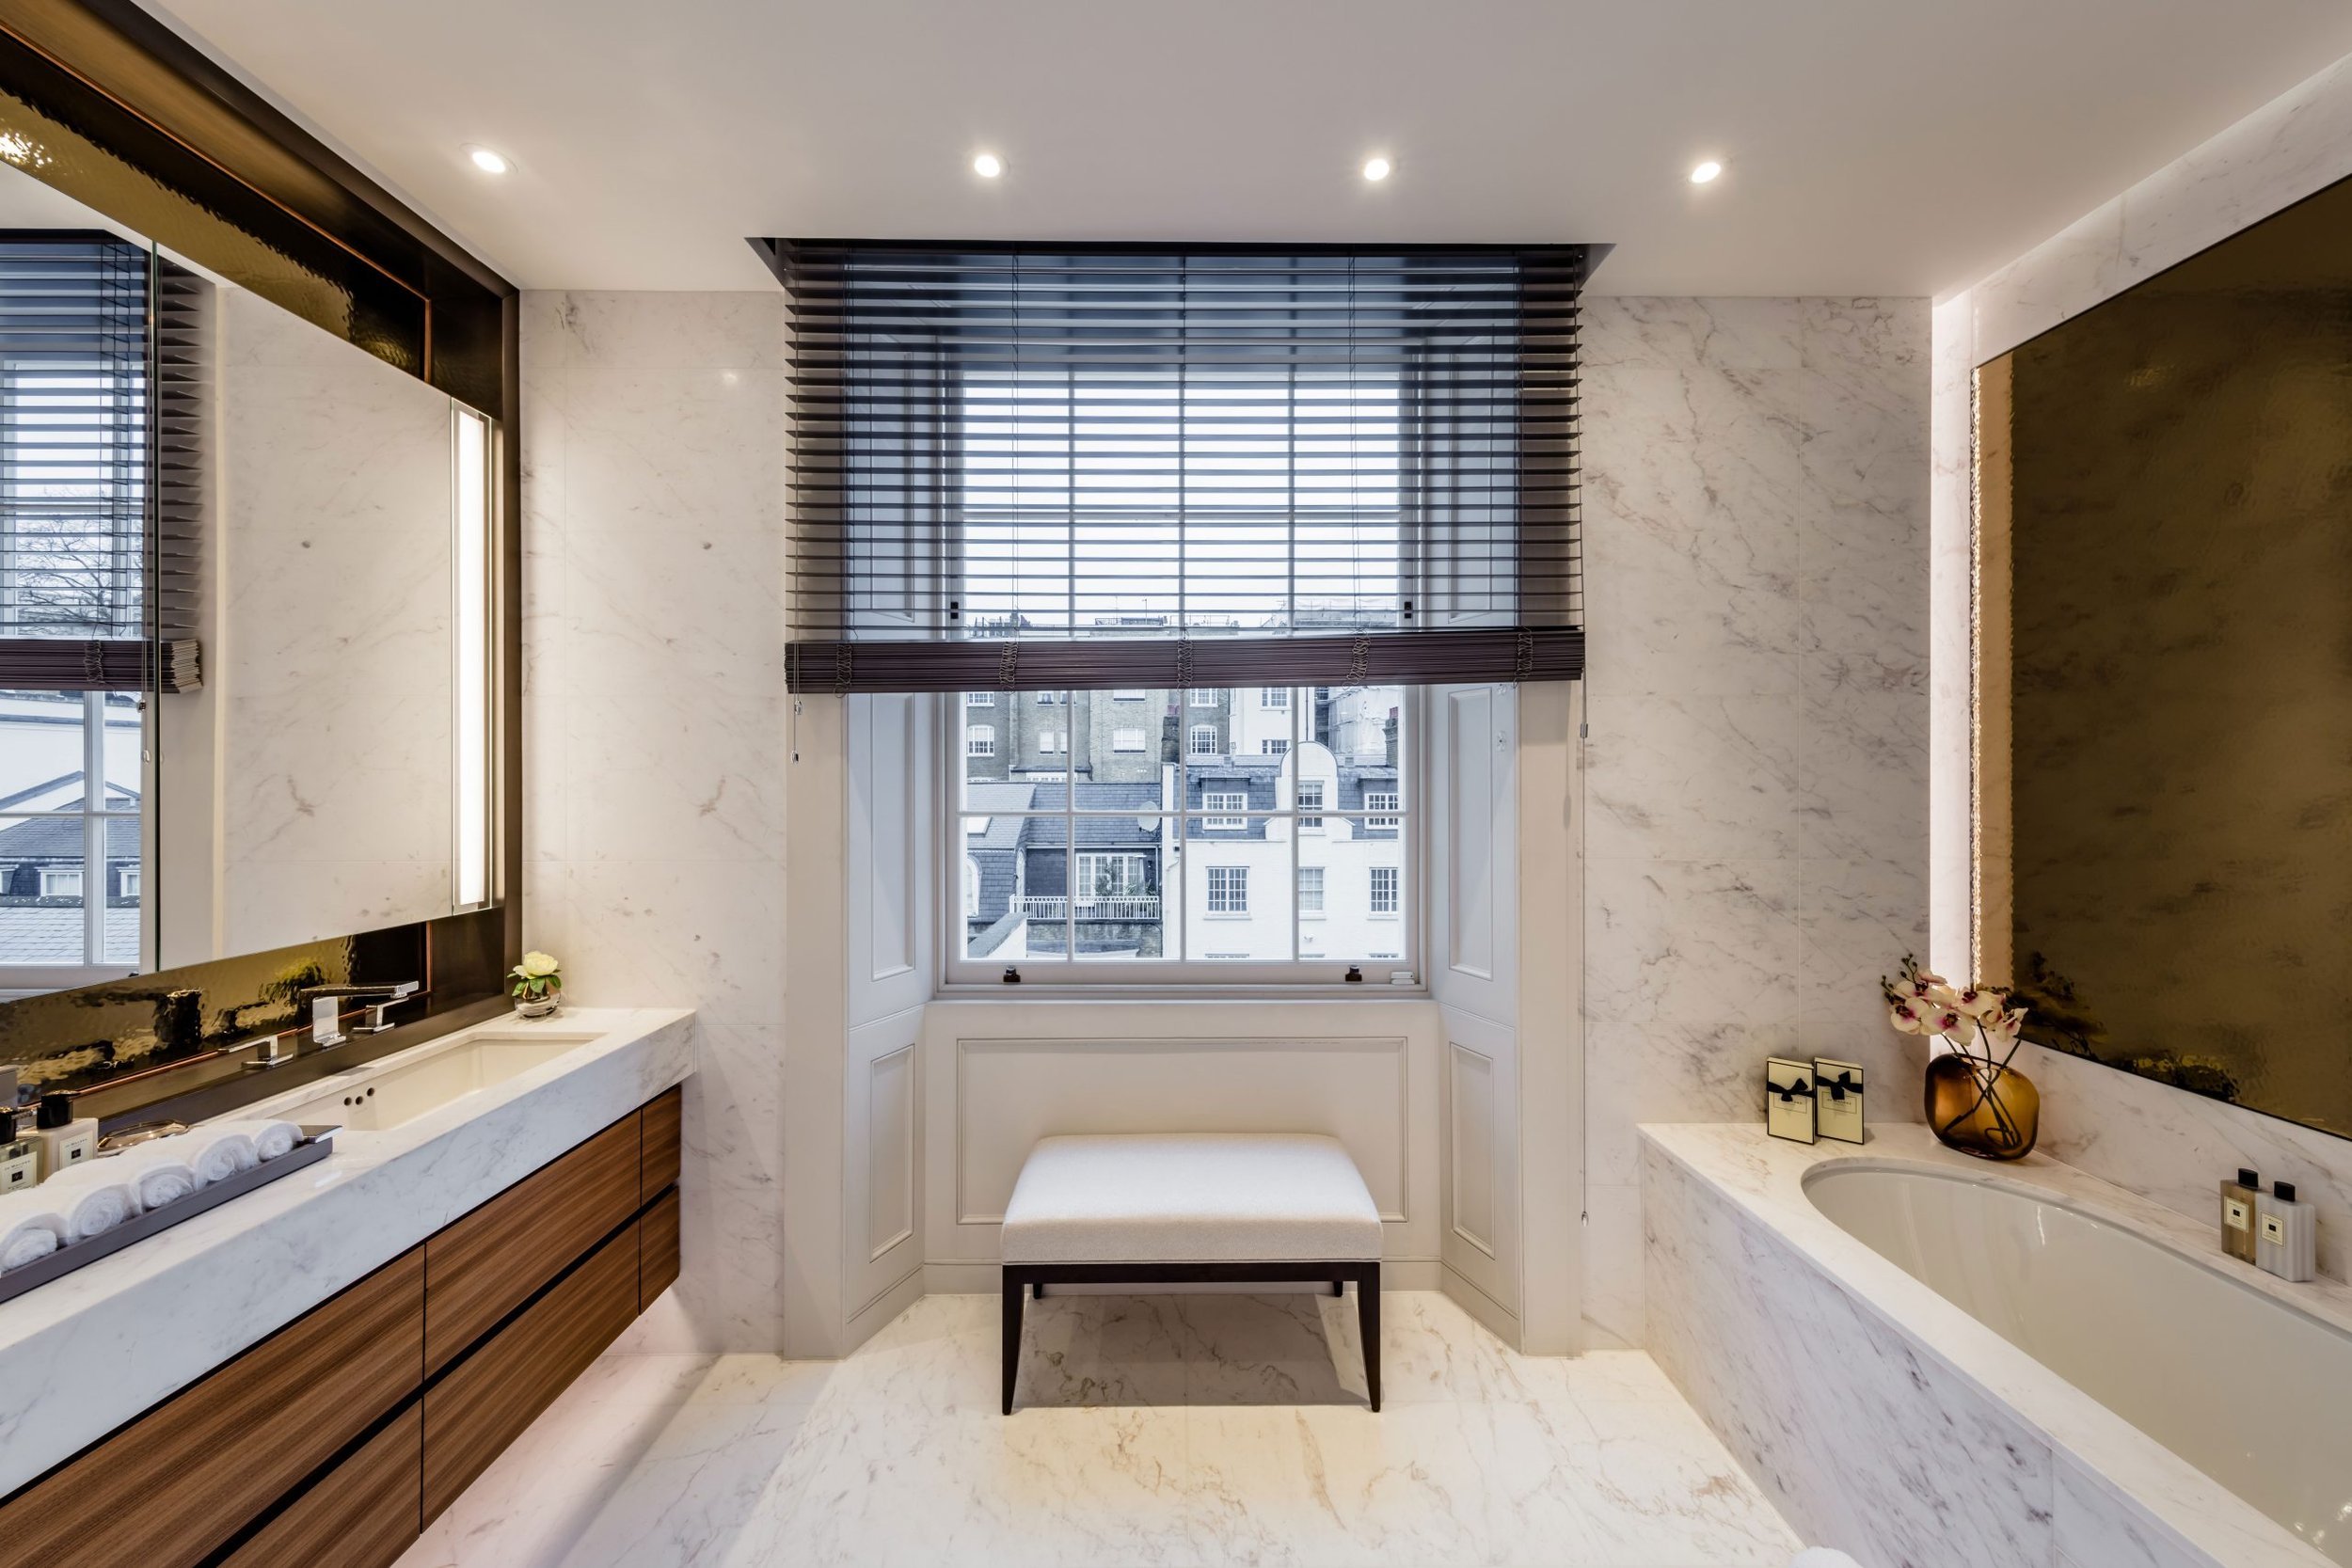 Luxury Bathroom Designed by london building company Ant Yapi at 13 eaton place